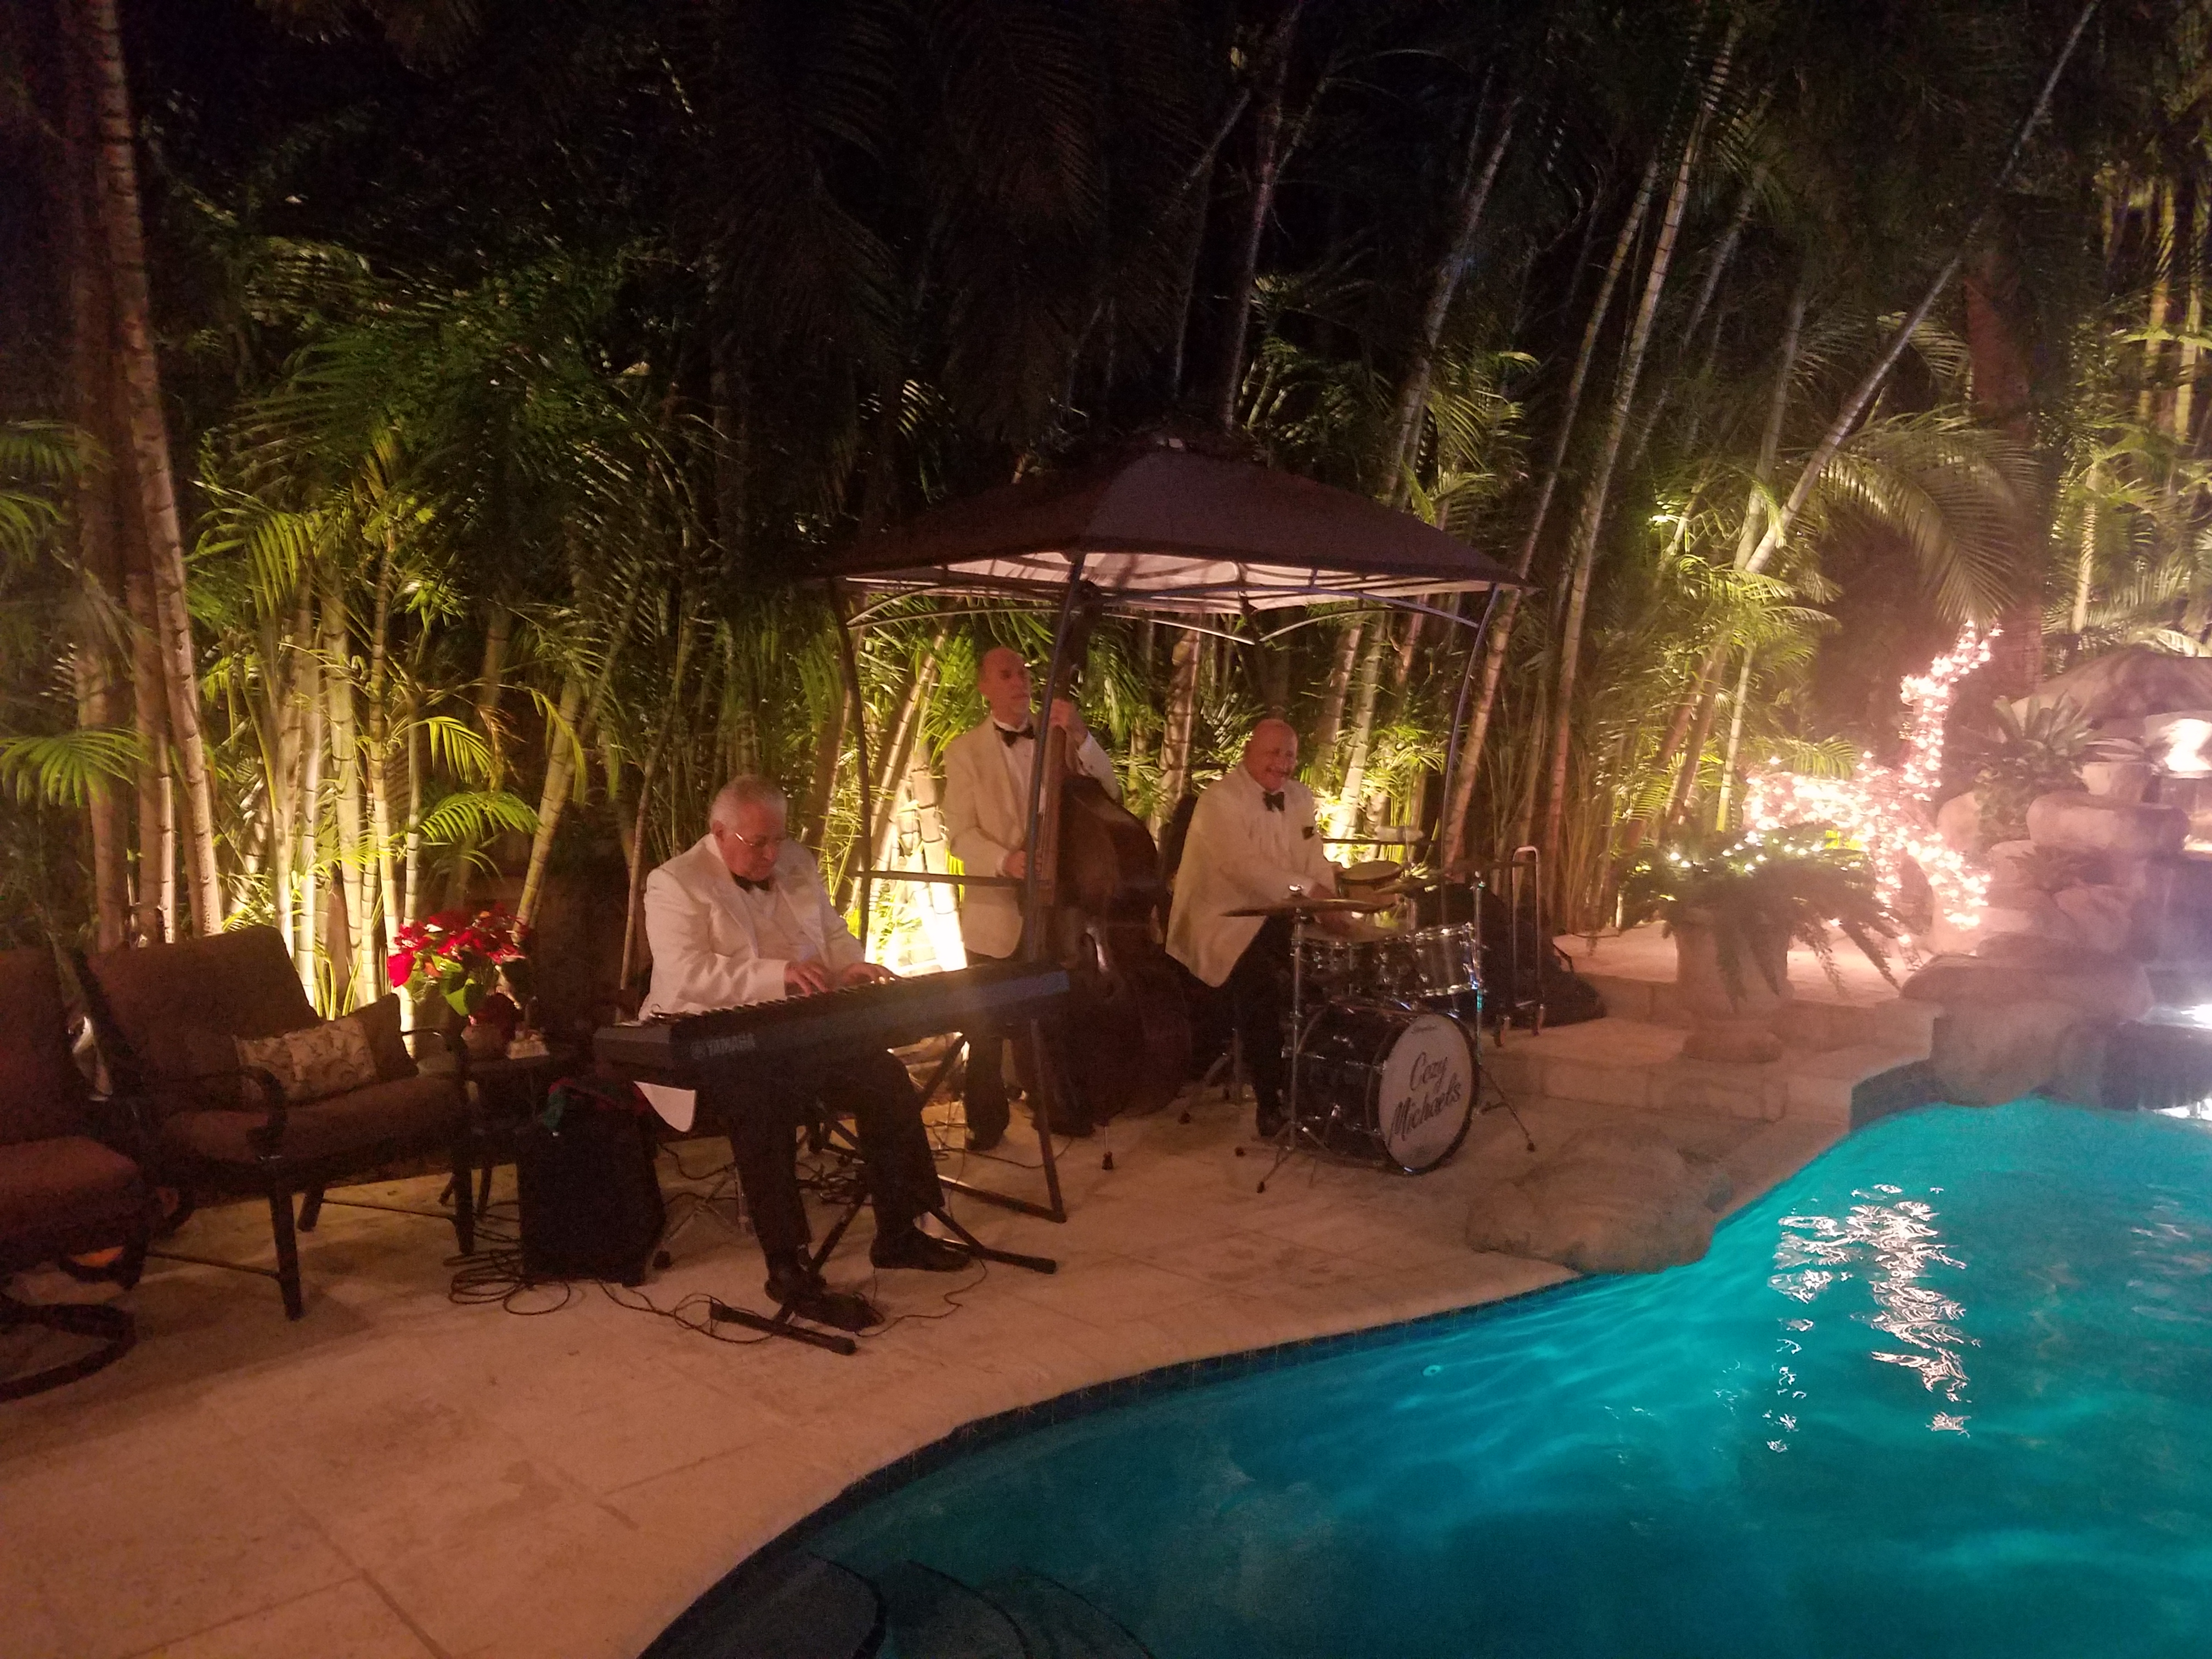 COZY MICHAELS TRIO - Jazz Band Miami, FL - The Bash